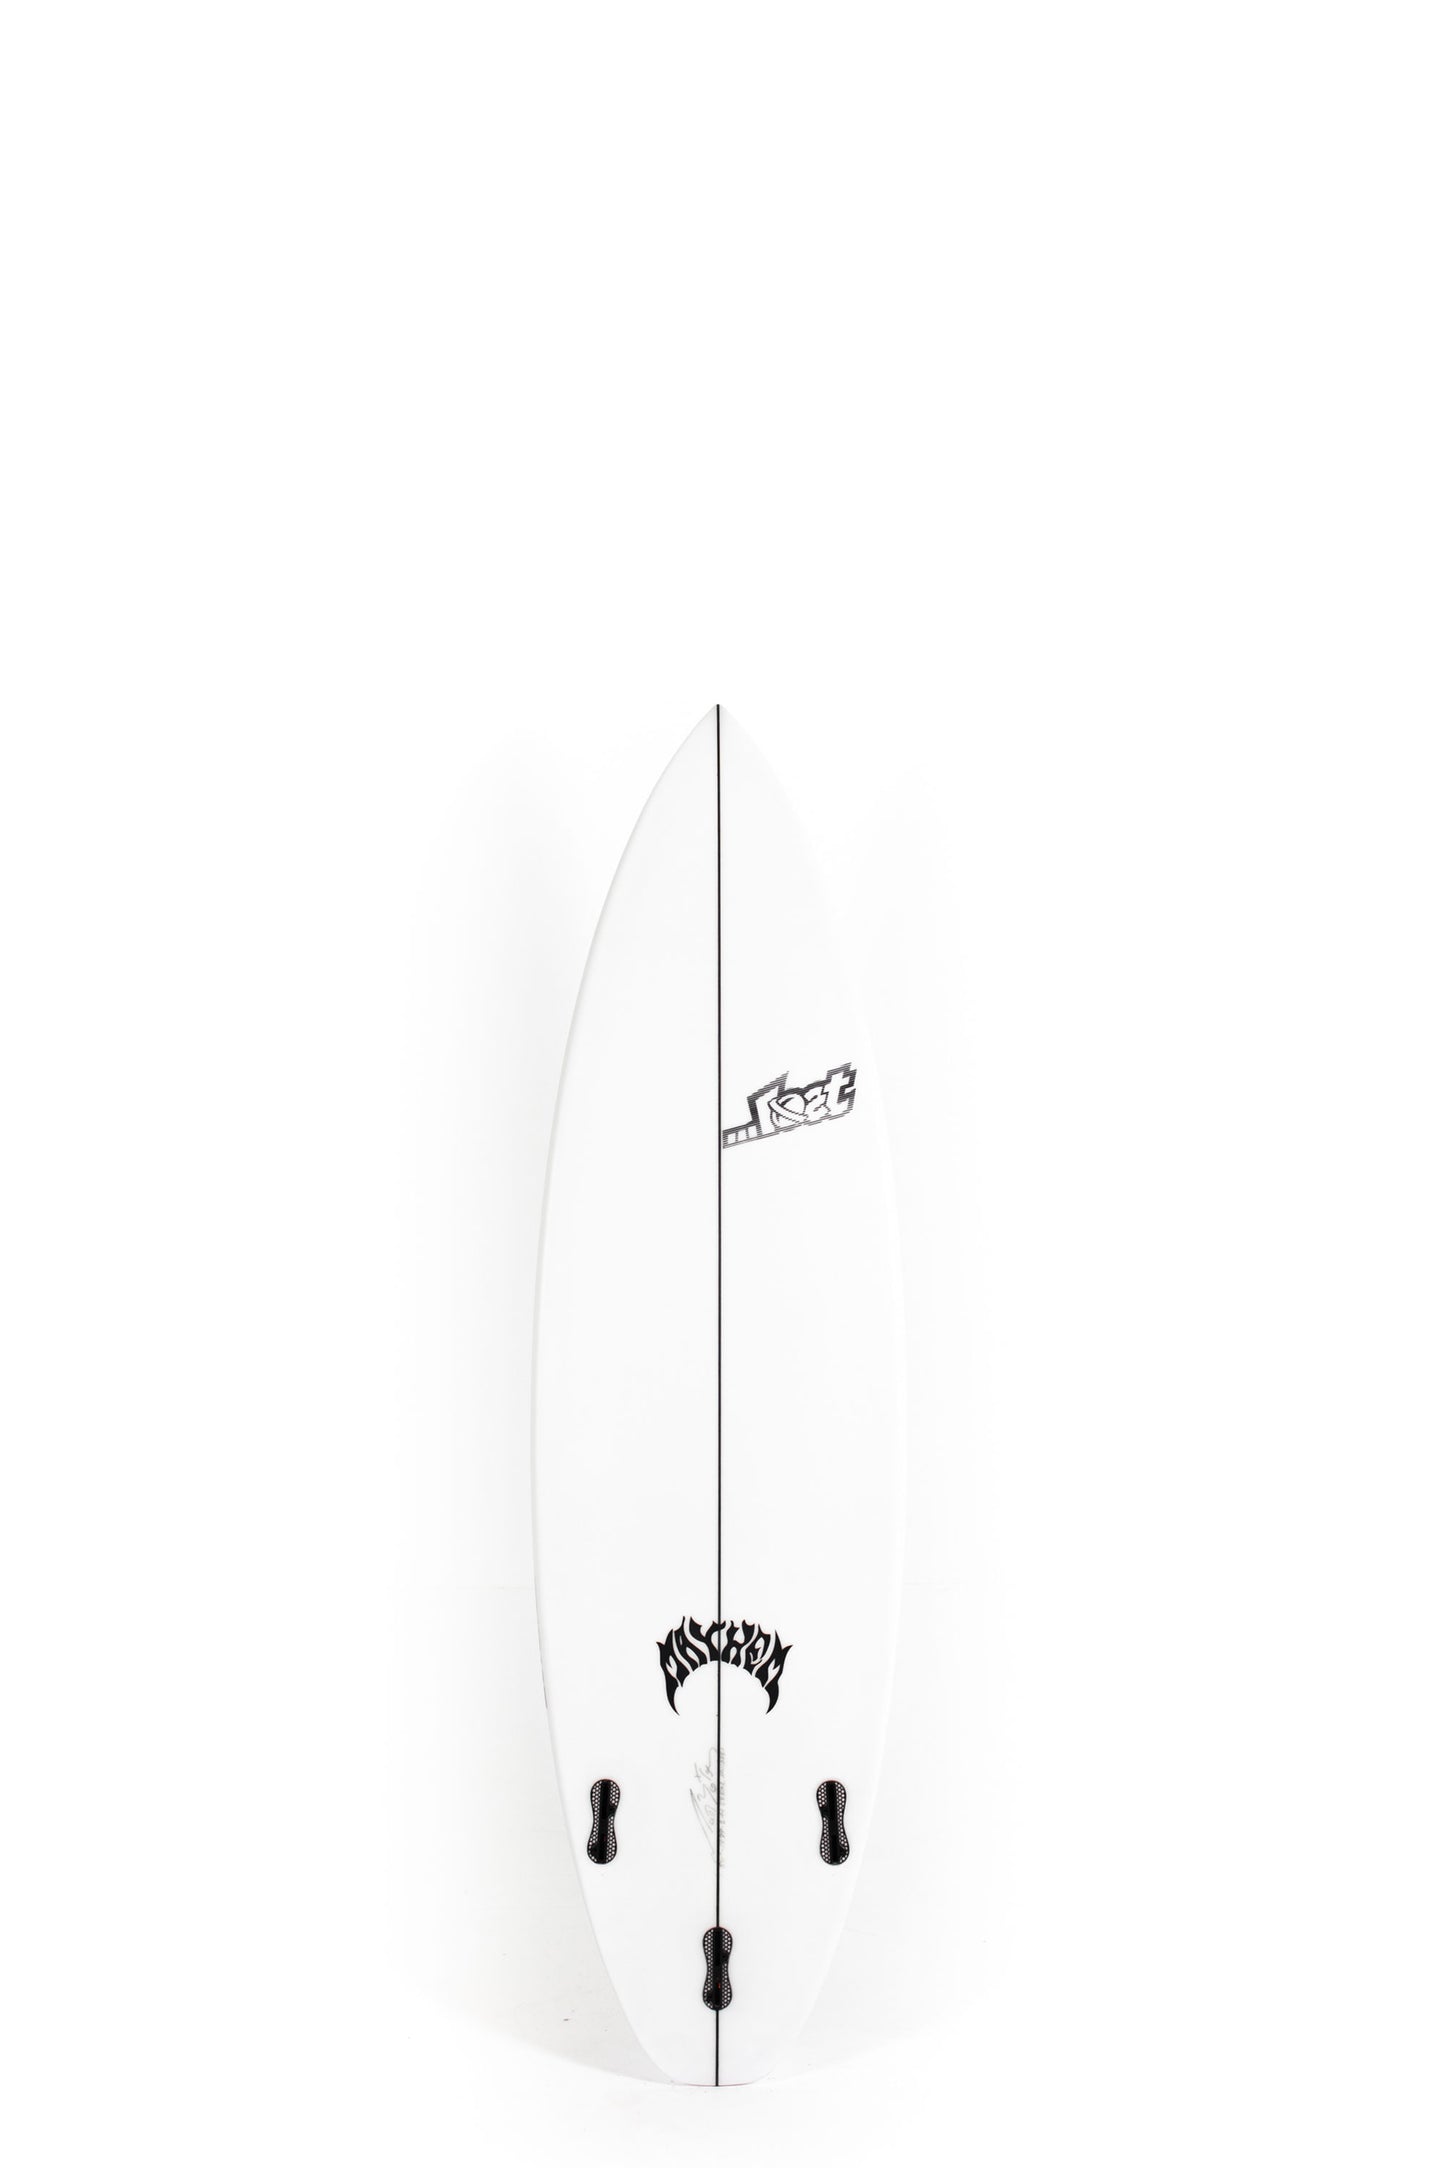 Pukas Surf Shop - Lost Surfboards - DRIVER 3.0 by Matt Biolos - 5'11" x 18,88 x 2,44 x 28,5L - MH16751